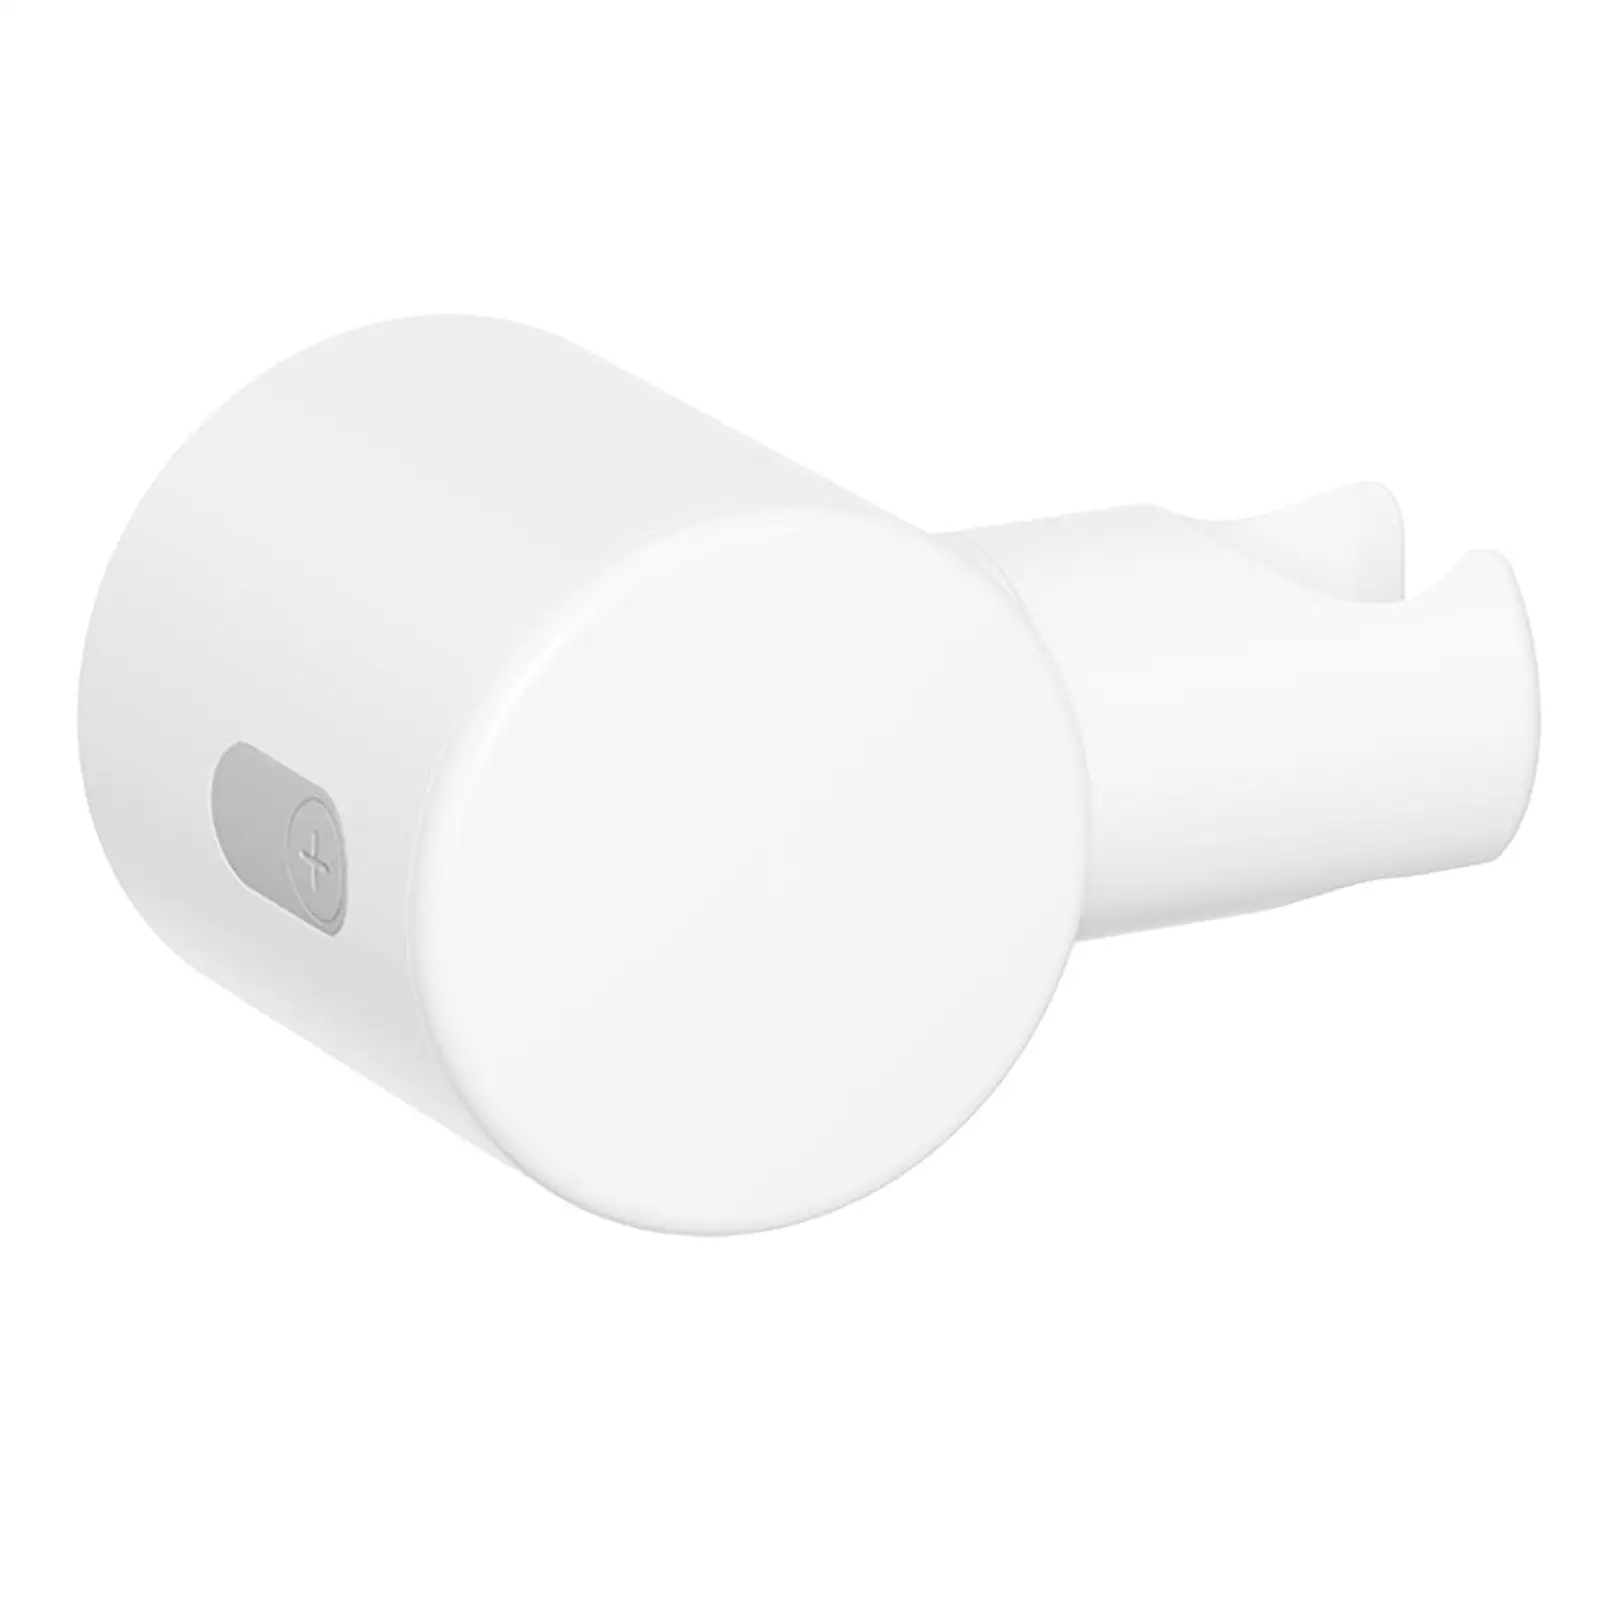 Plastic Handheld Shower Holder Shower Fixing Bracket Lightweight Easy Install Adjustable No Drilling Rack Bathroom Accessories